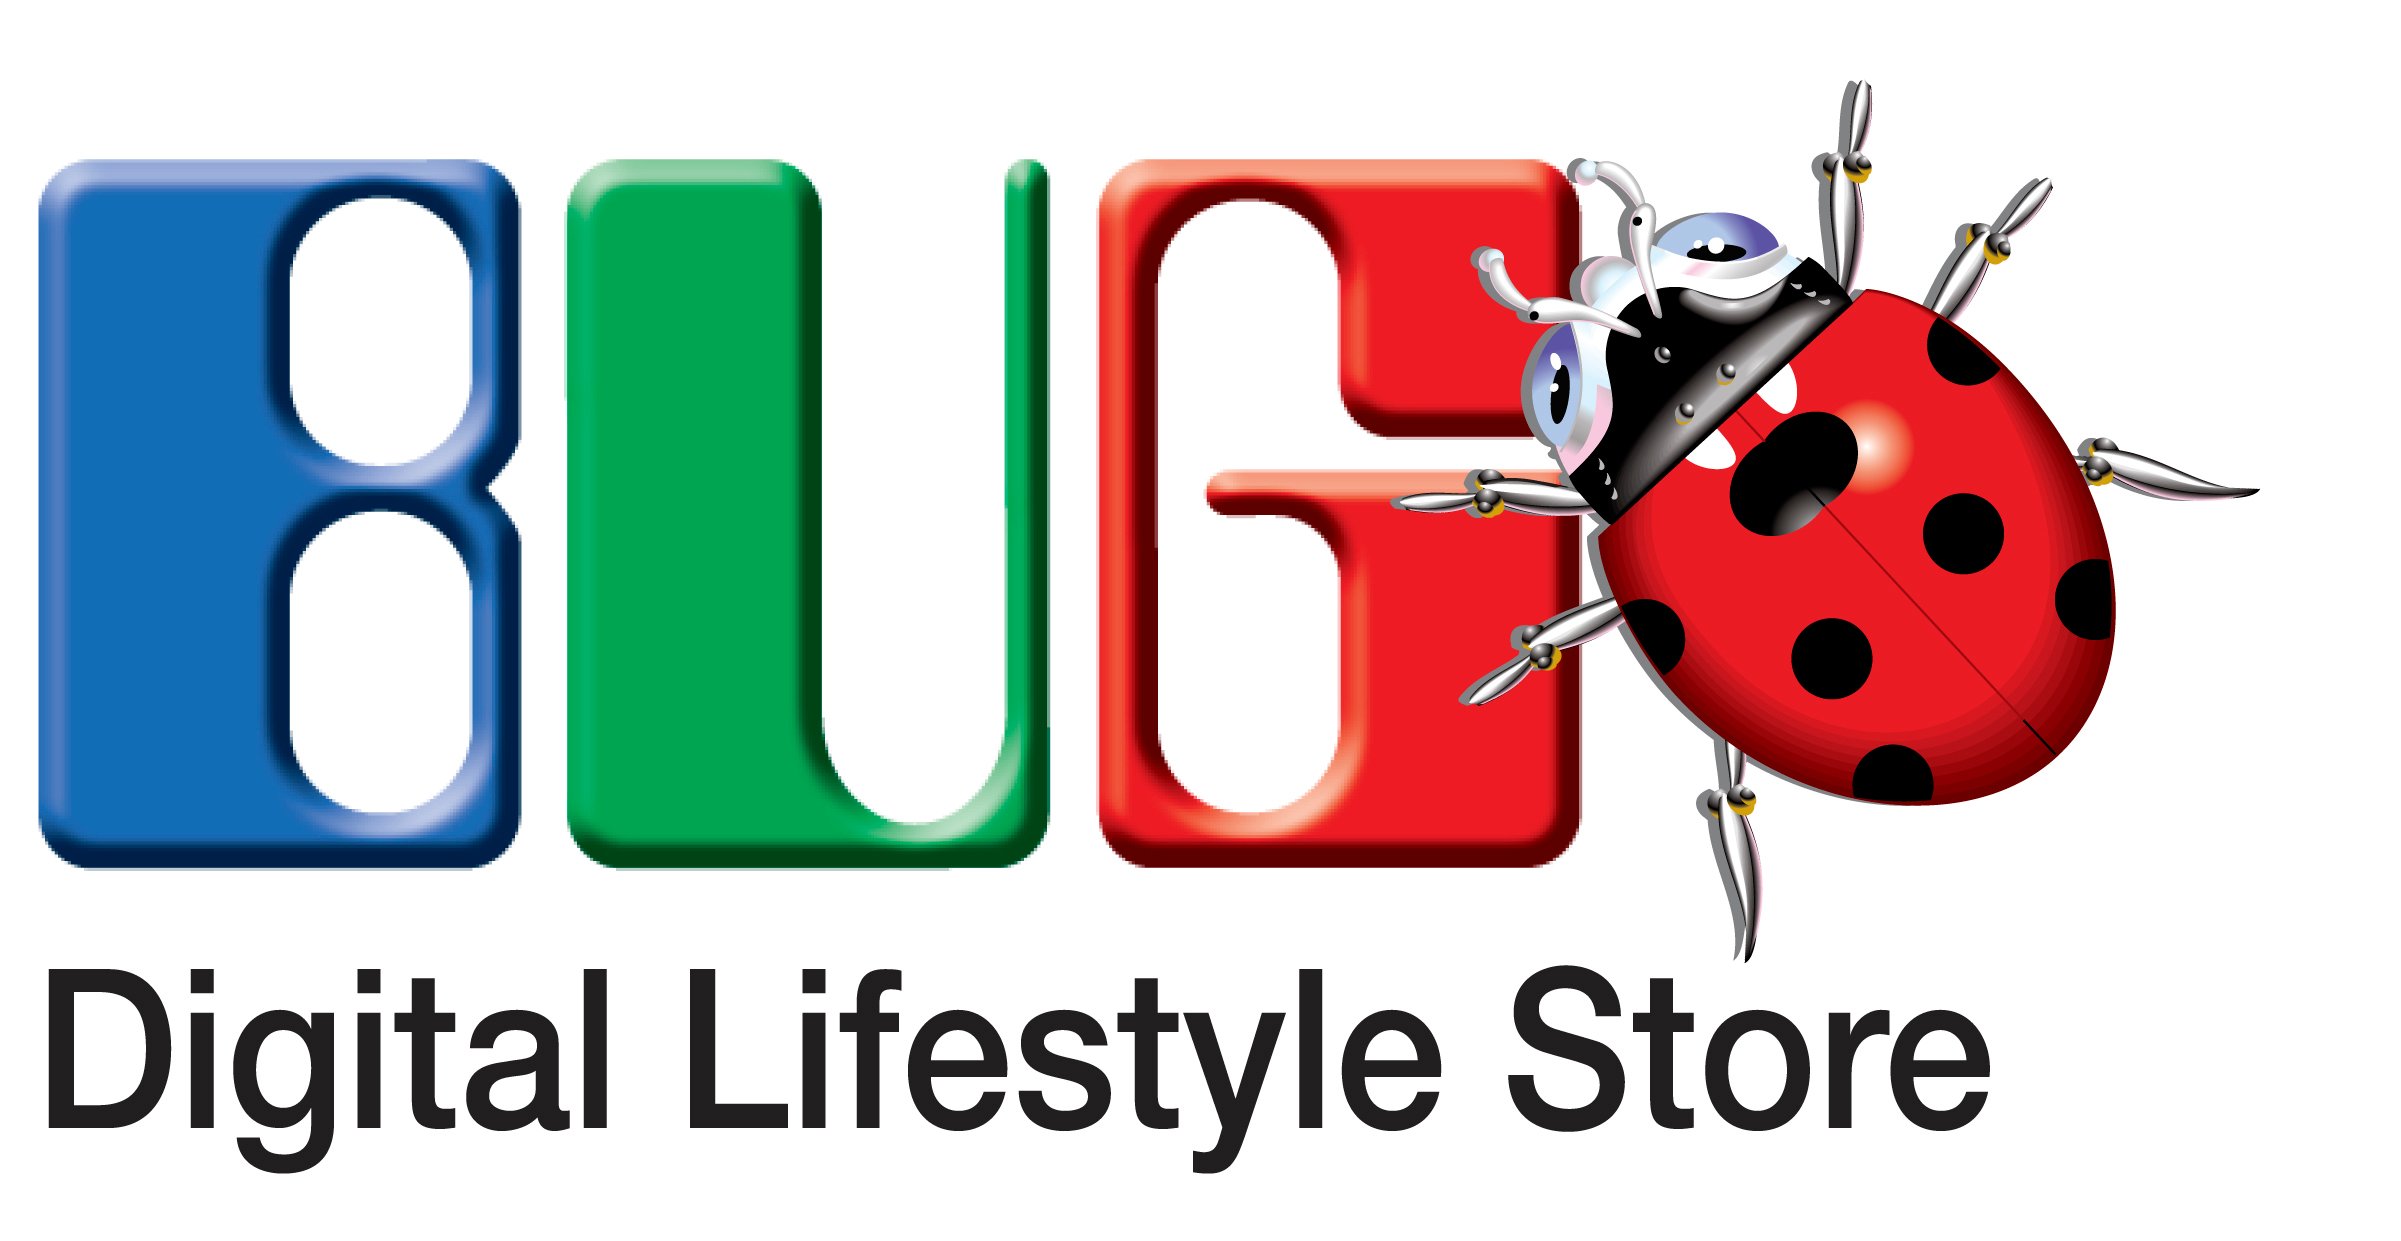 bug store logo